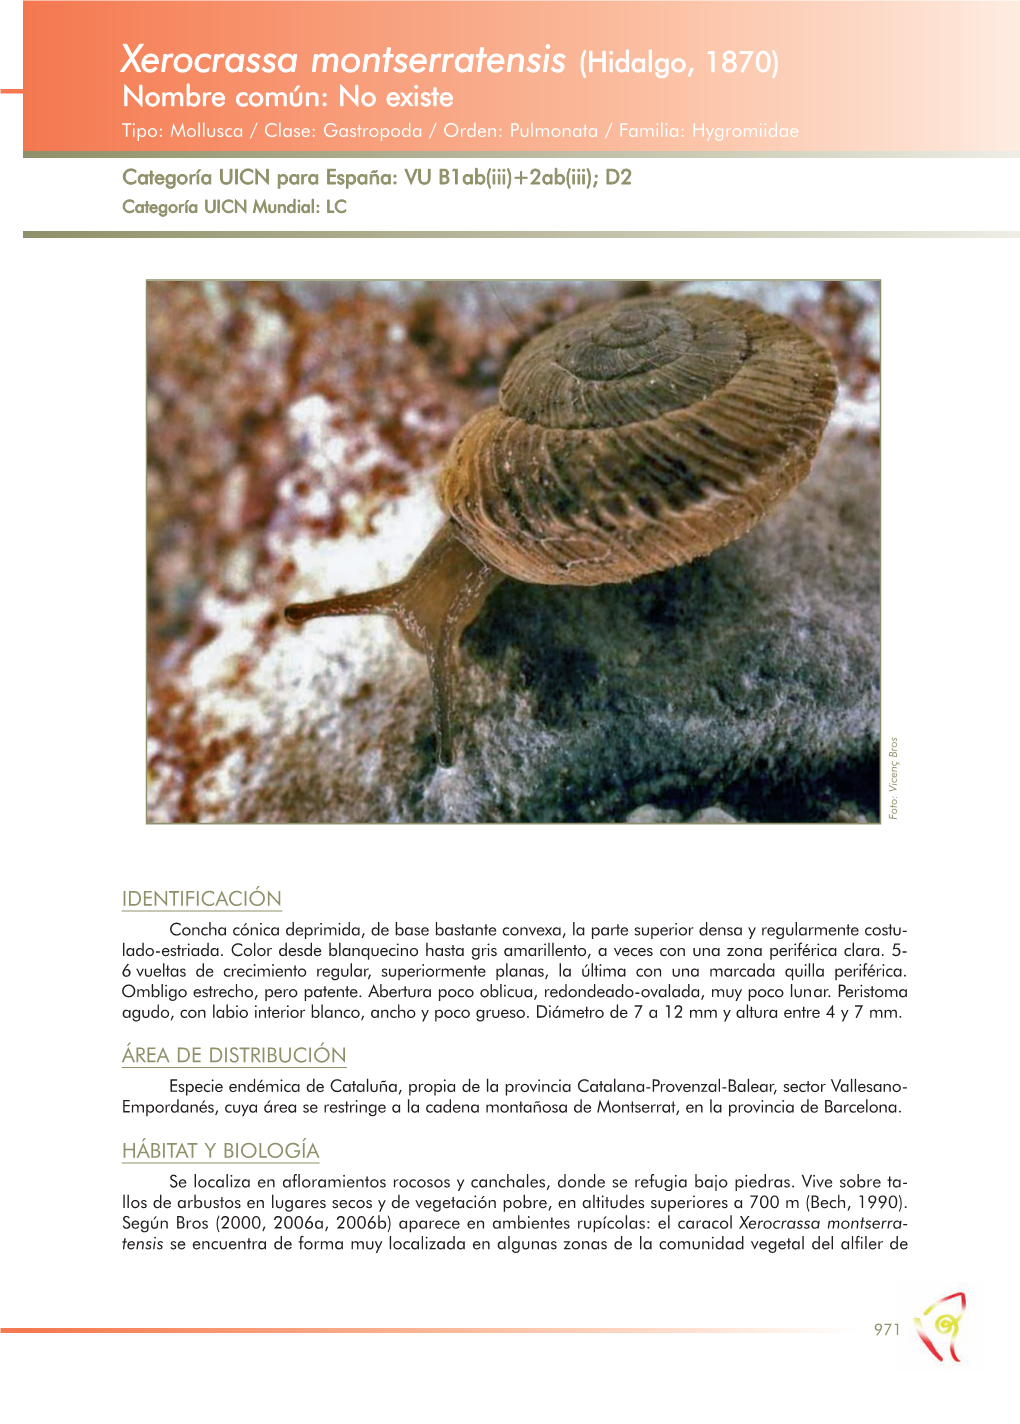 Xerocrassa Montserratensis (Hidalgo, 1870) Nombre Común: No Existe Tipo: Mollusca / Clase: Gastropoda / Orden: Pulmonata / Familia: Hygromiidae